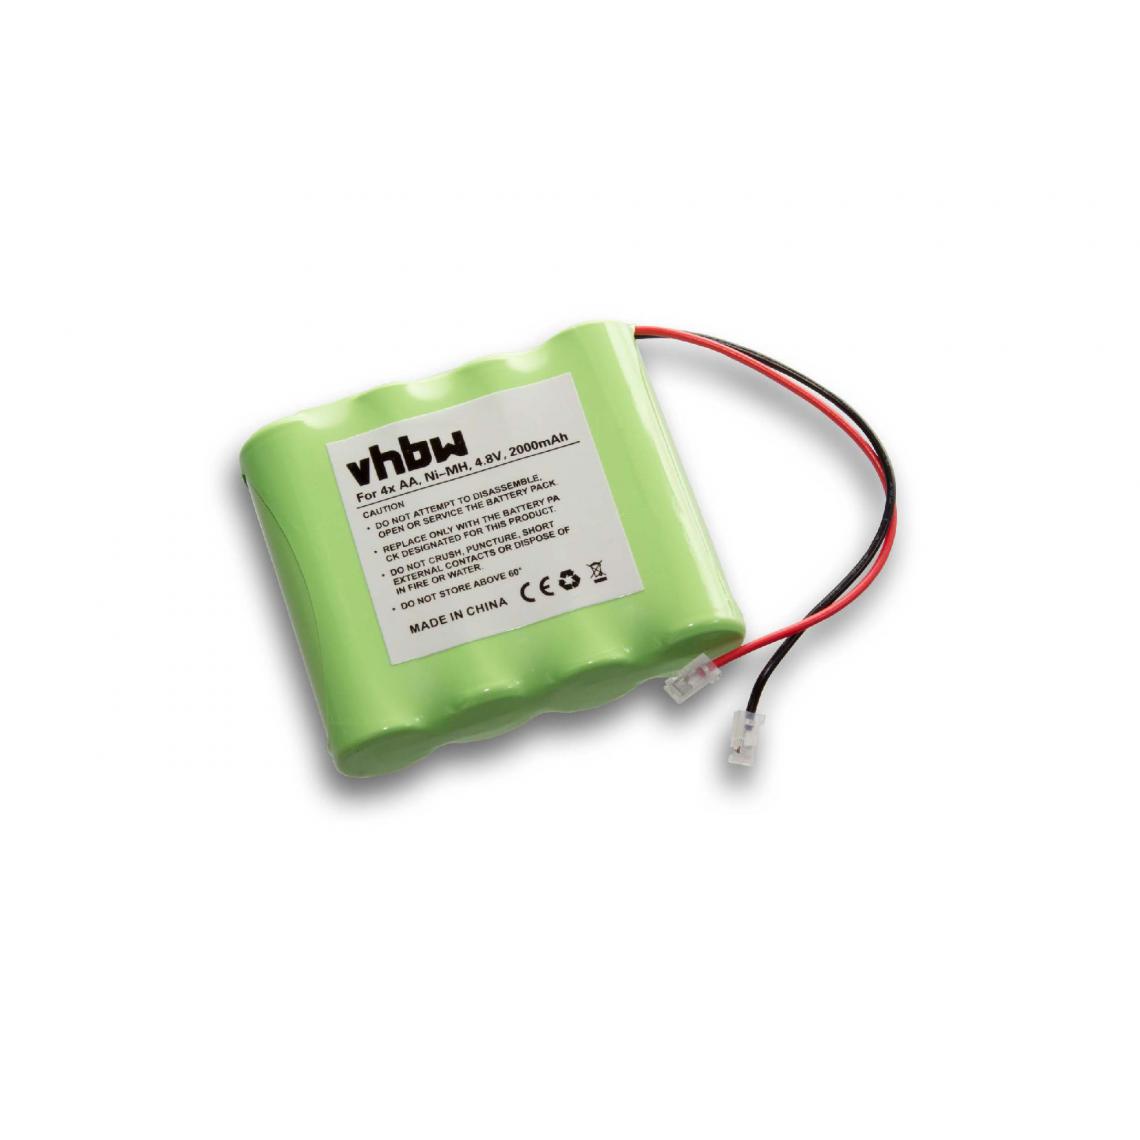 Vhbw - vhbw Batterie NiMH Universal Batterie Pack 2000mAh 4.8V 4x AA - Autre appareil de mesure